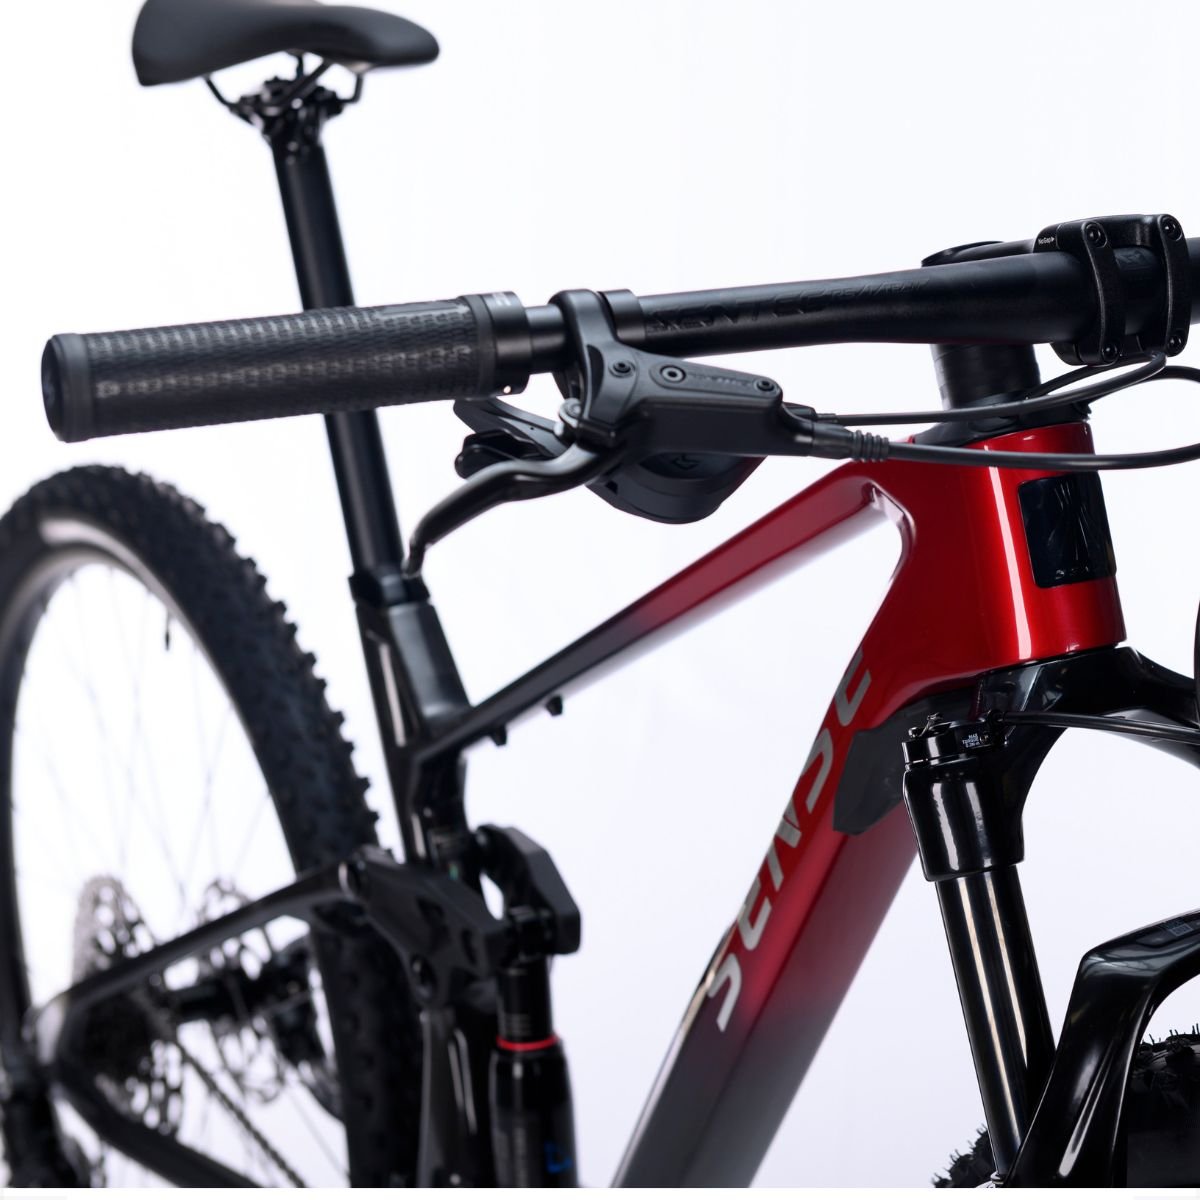 Bicicleta Full Sense Invictus Sport Carbono Shimano Cues:vermelho+preto/17 - 4